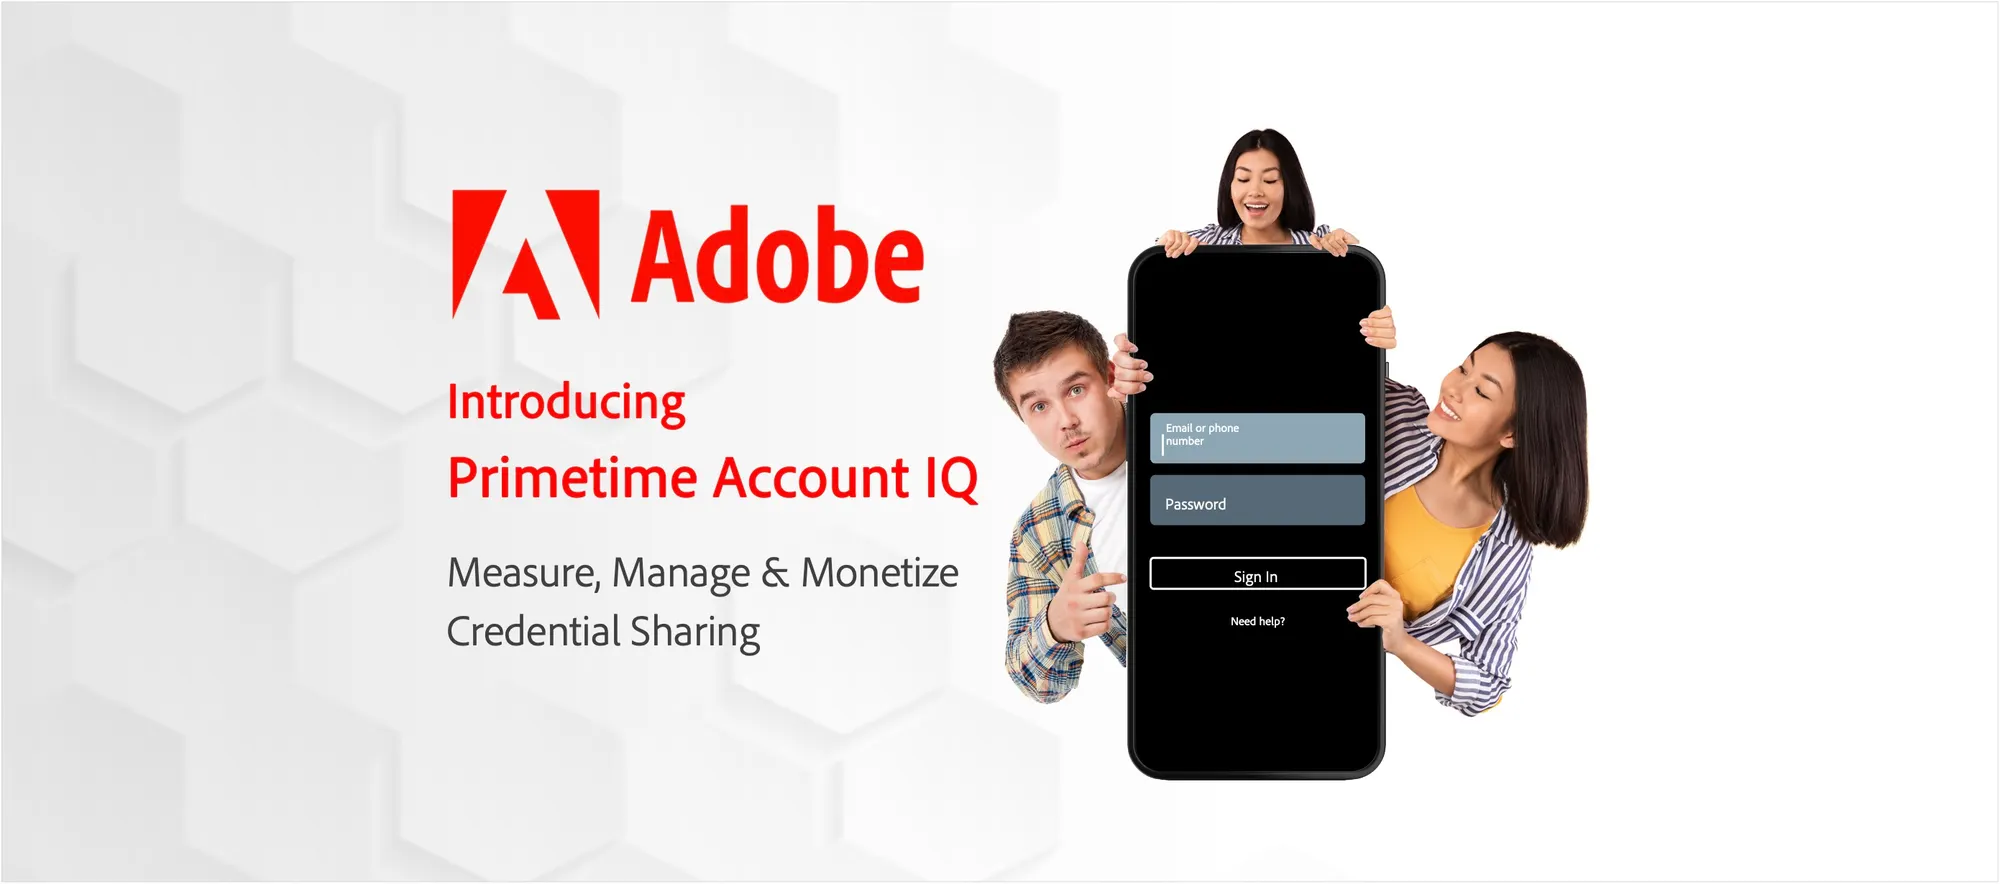 Adobe introduces Primetime Account IQ. 